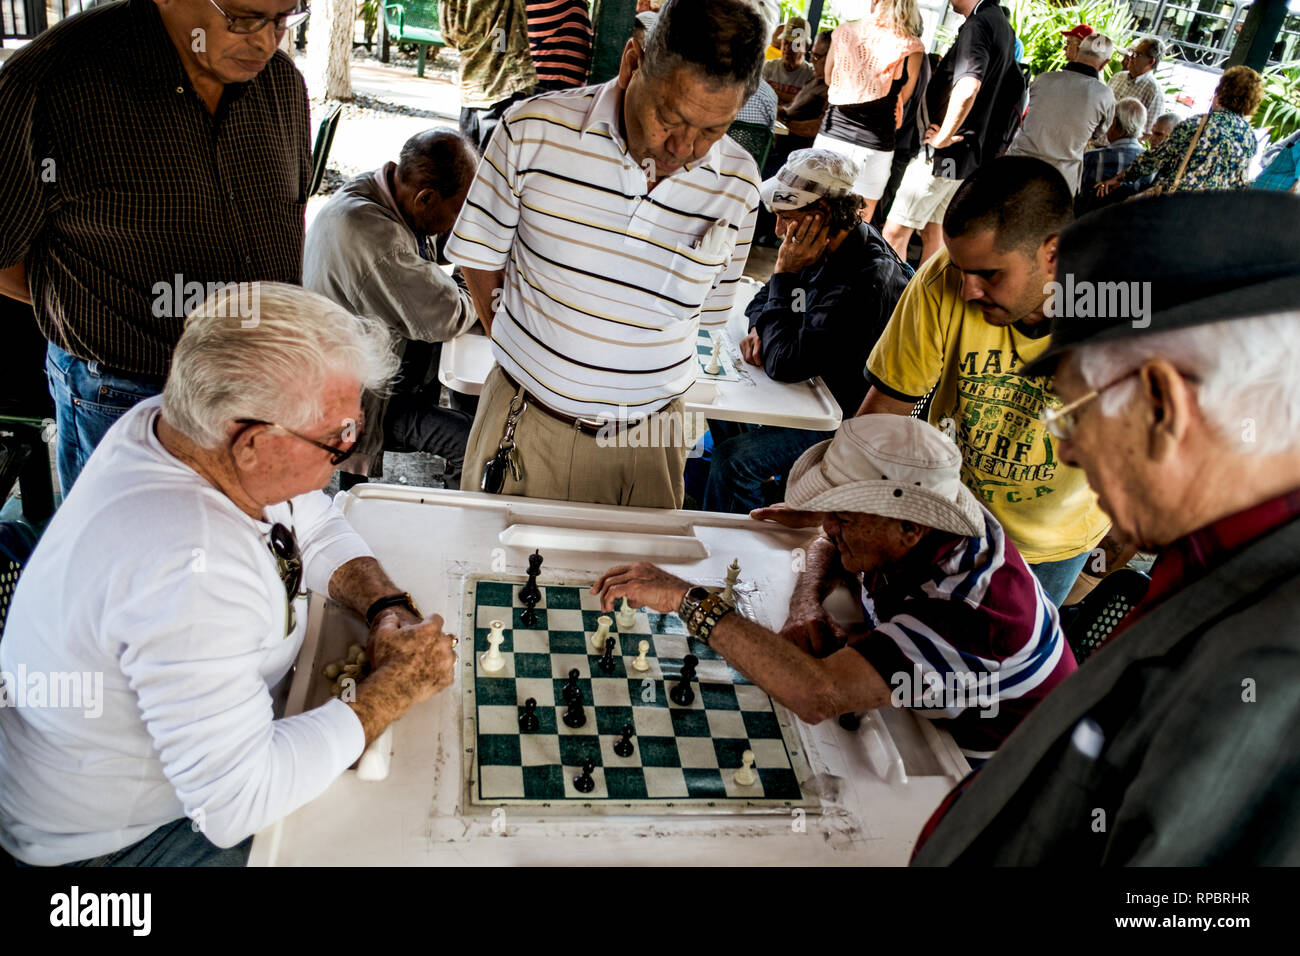 Cuban men playing chess in Little Havana's famous Máximo Gómez Park in the Little Havana neighborhood, Miami. (Photo credit: Gonzales Photo - Flemming Bo Jensen). Stock Photo